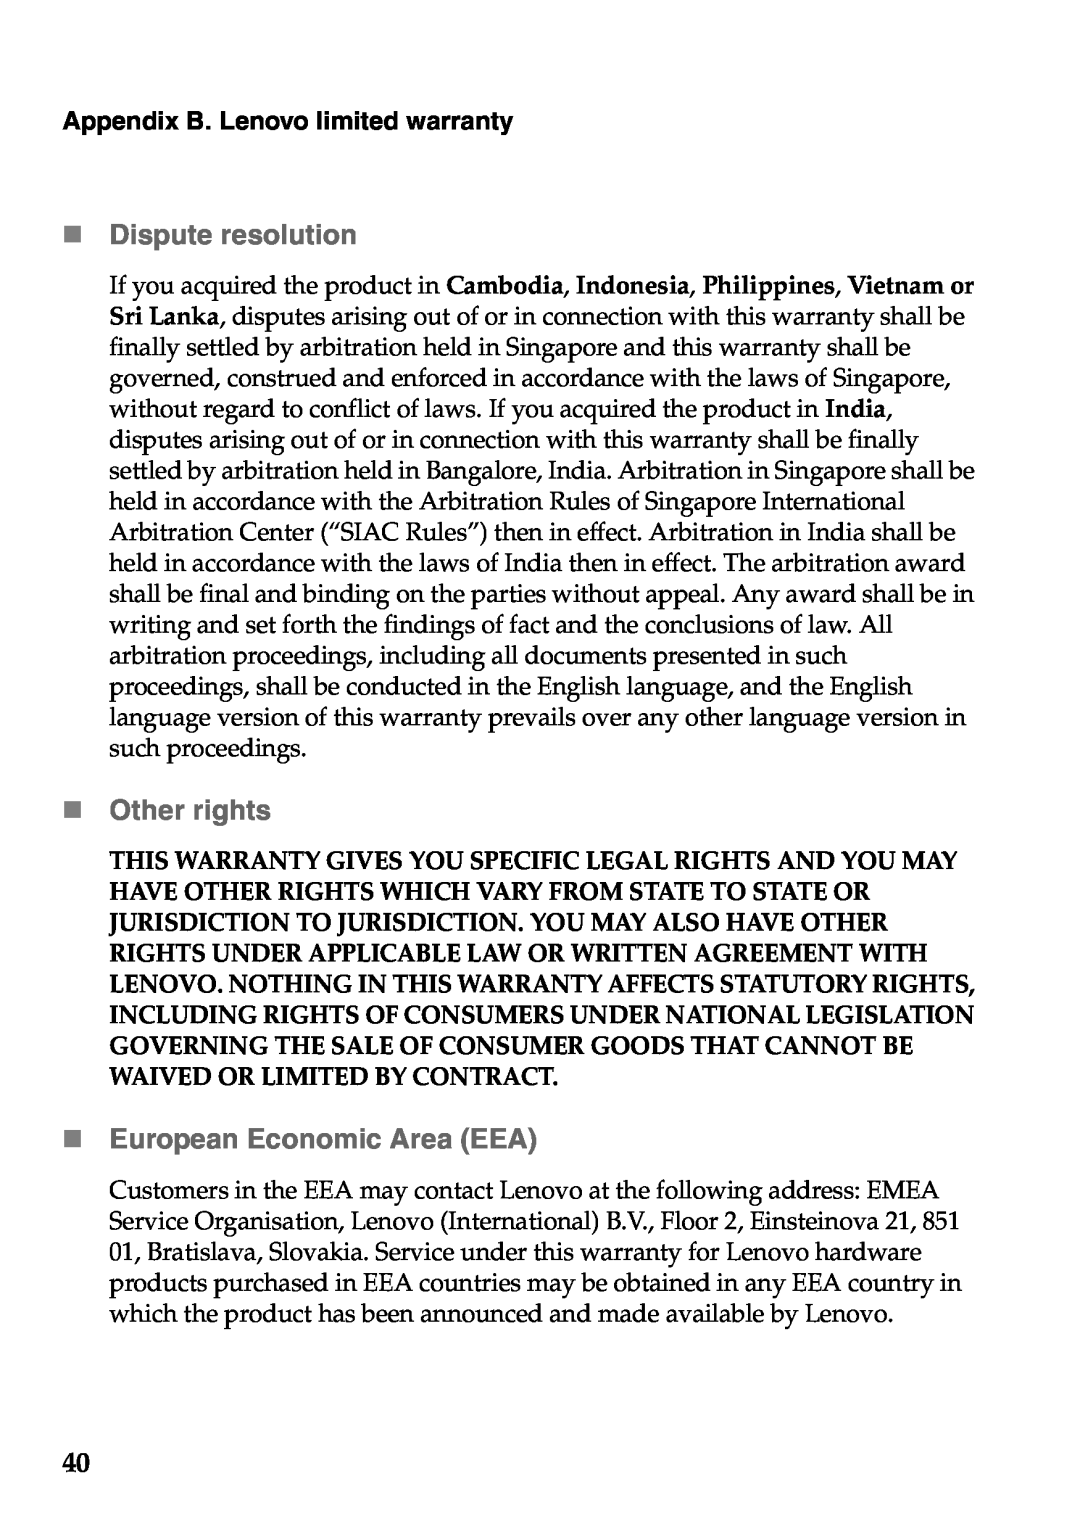 Lenovo V360 manual „ Dispute resolution, „ Other rights, „ European Economic Area EEA, Appendix B. Lenovo limited warranty 